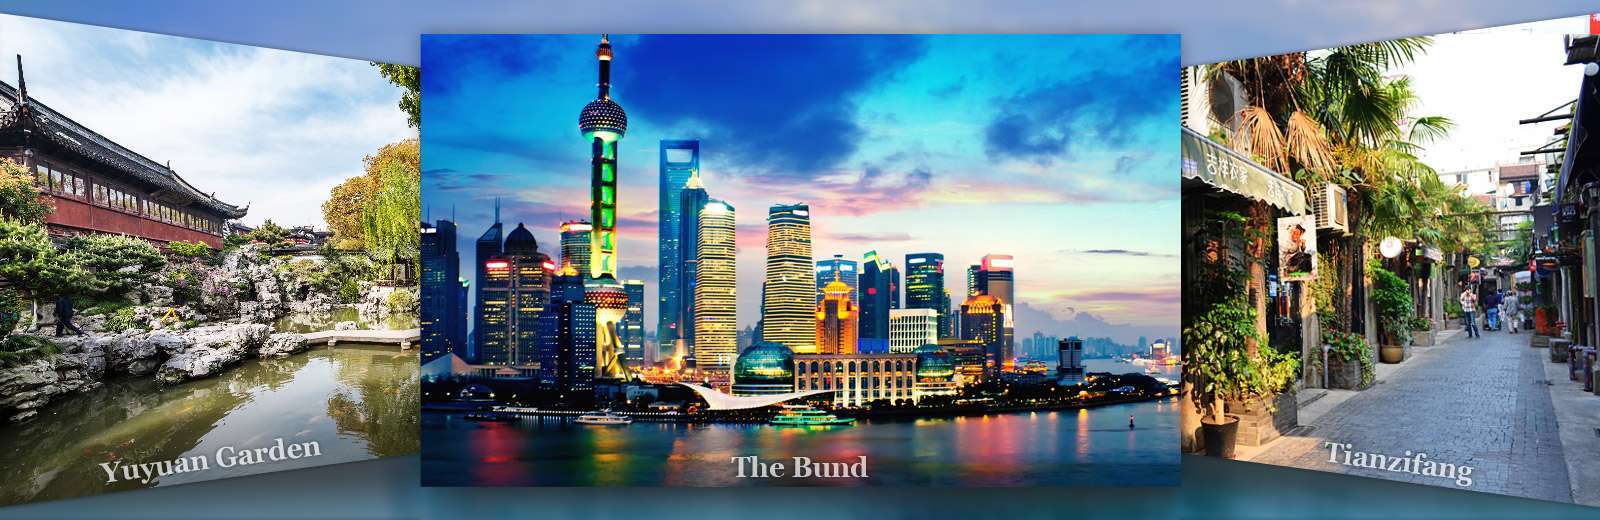 Yangtze River Cruise From Shanghai